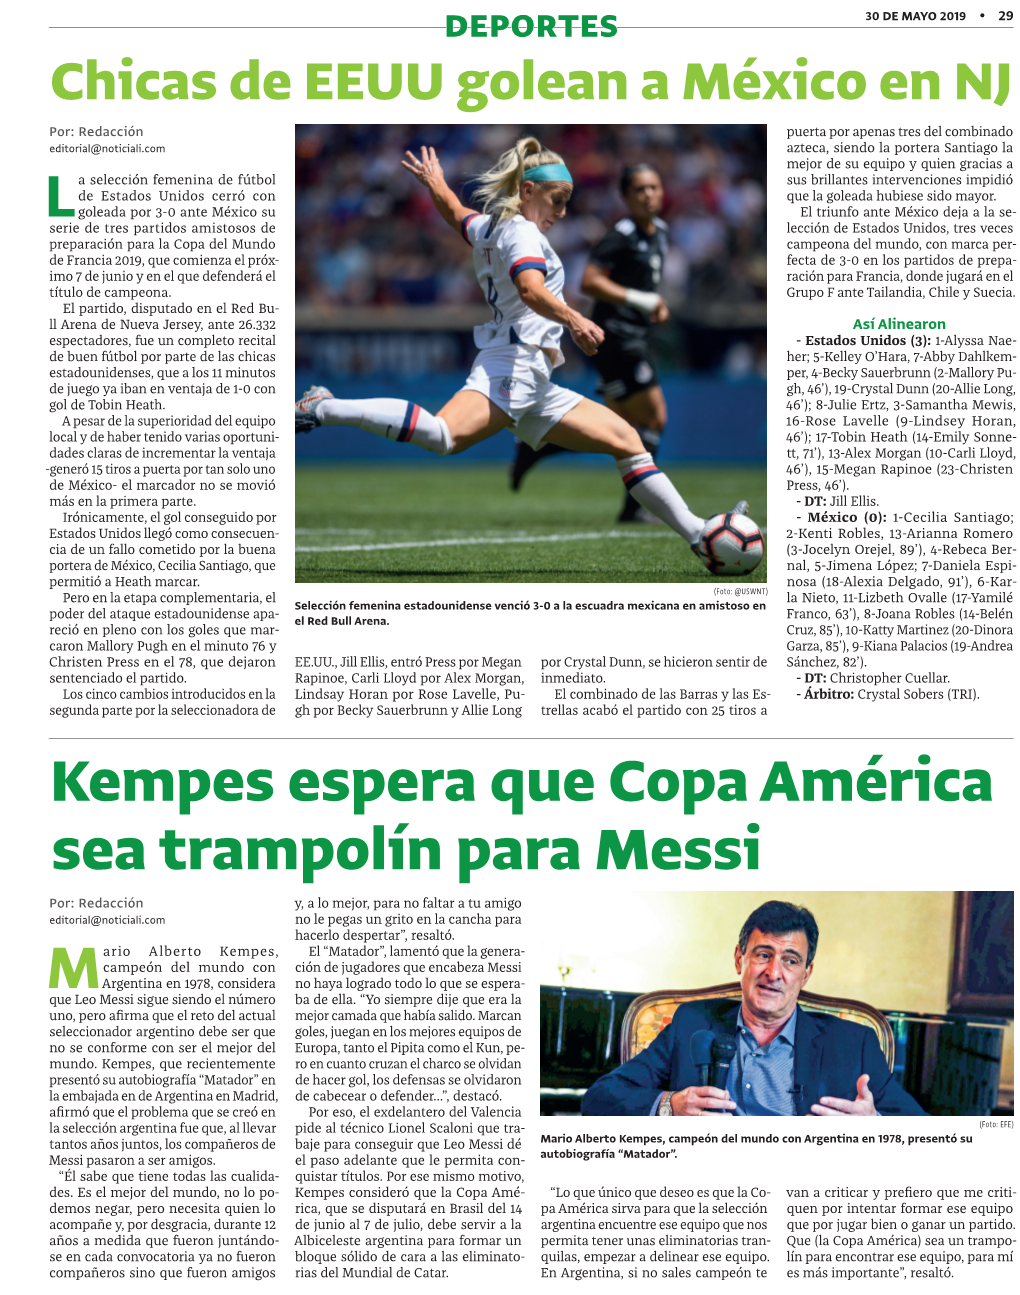 Kempes Espera Que Copa América Sea Trampolín Para Messi